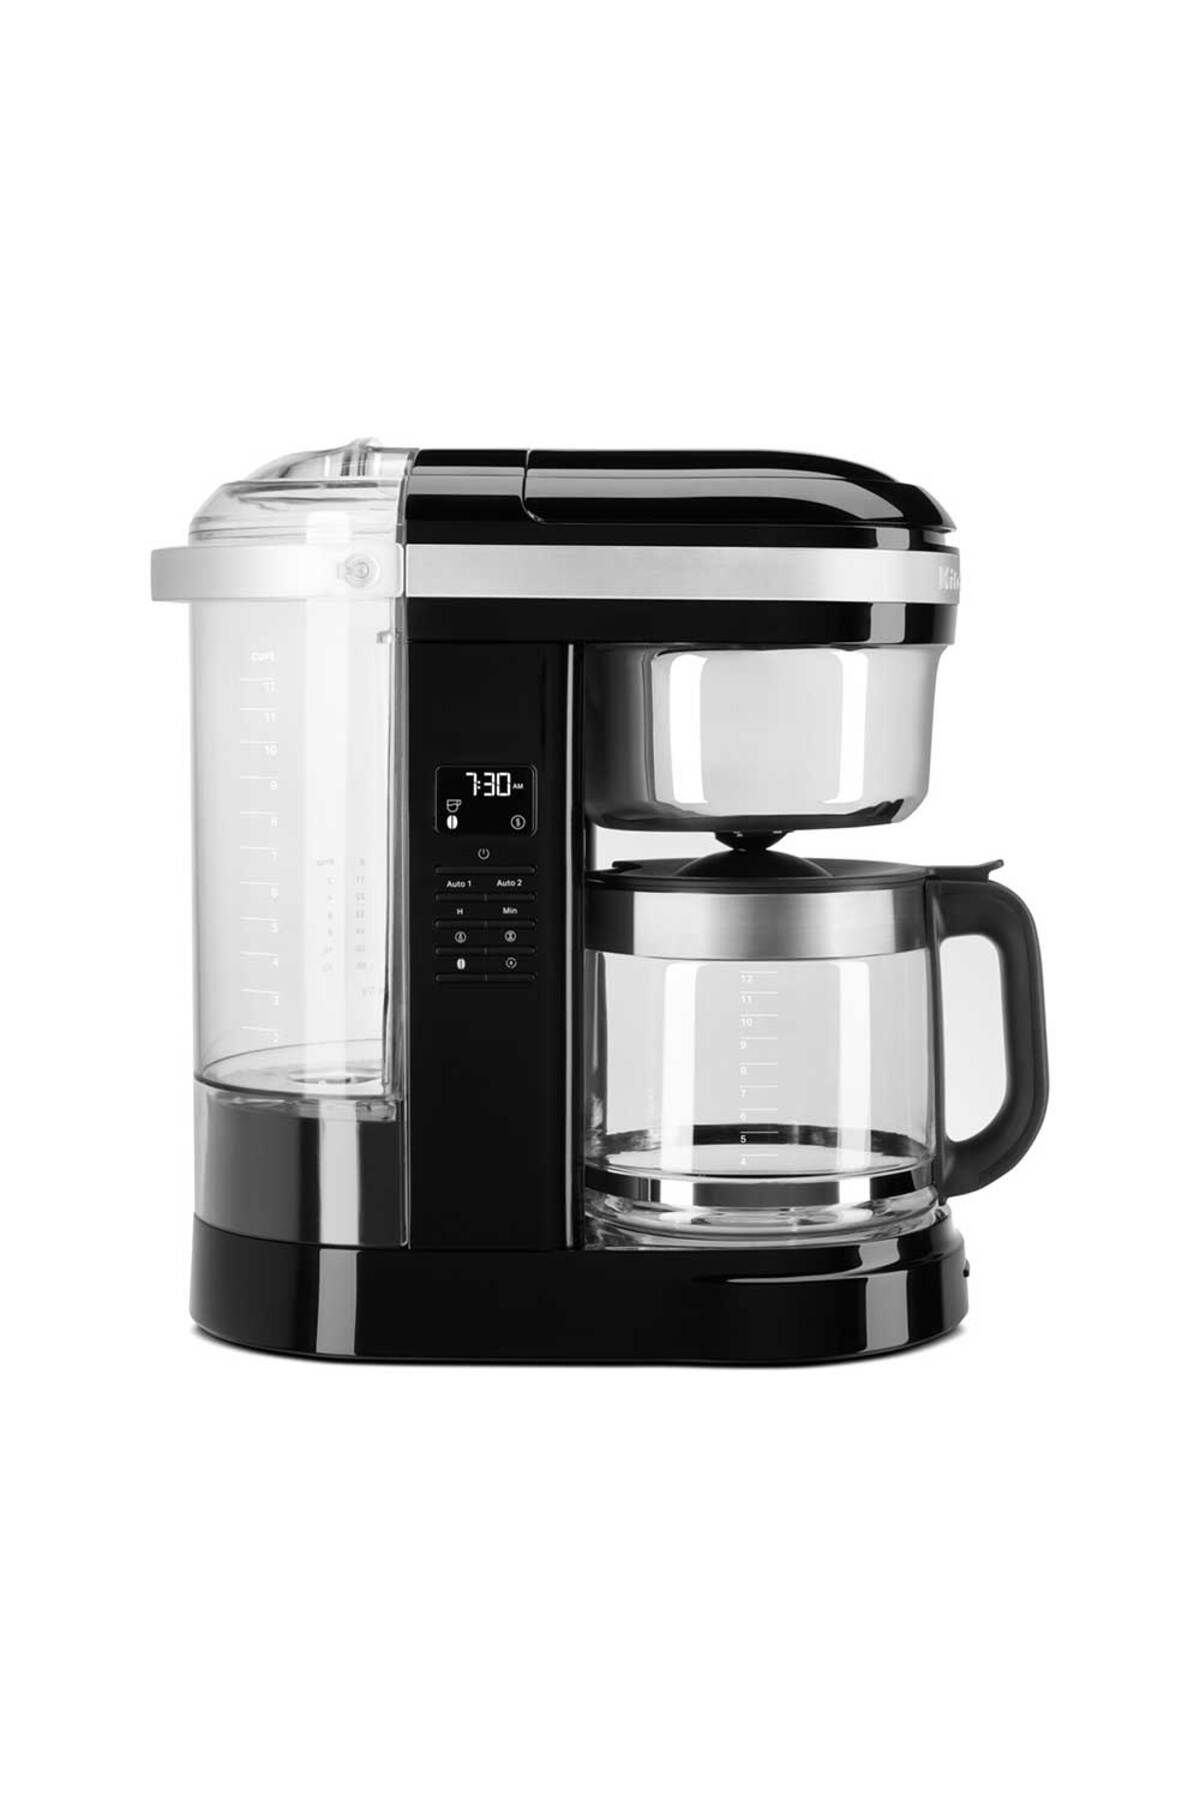 Kitchenaid 5kcm1209 Filtre Kahve Makinesi Onyx Black